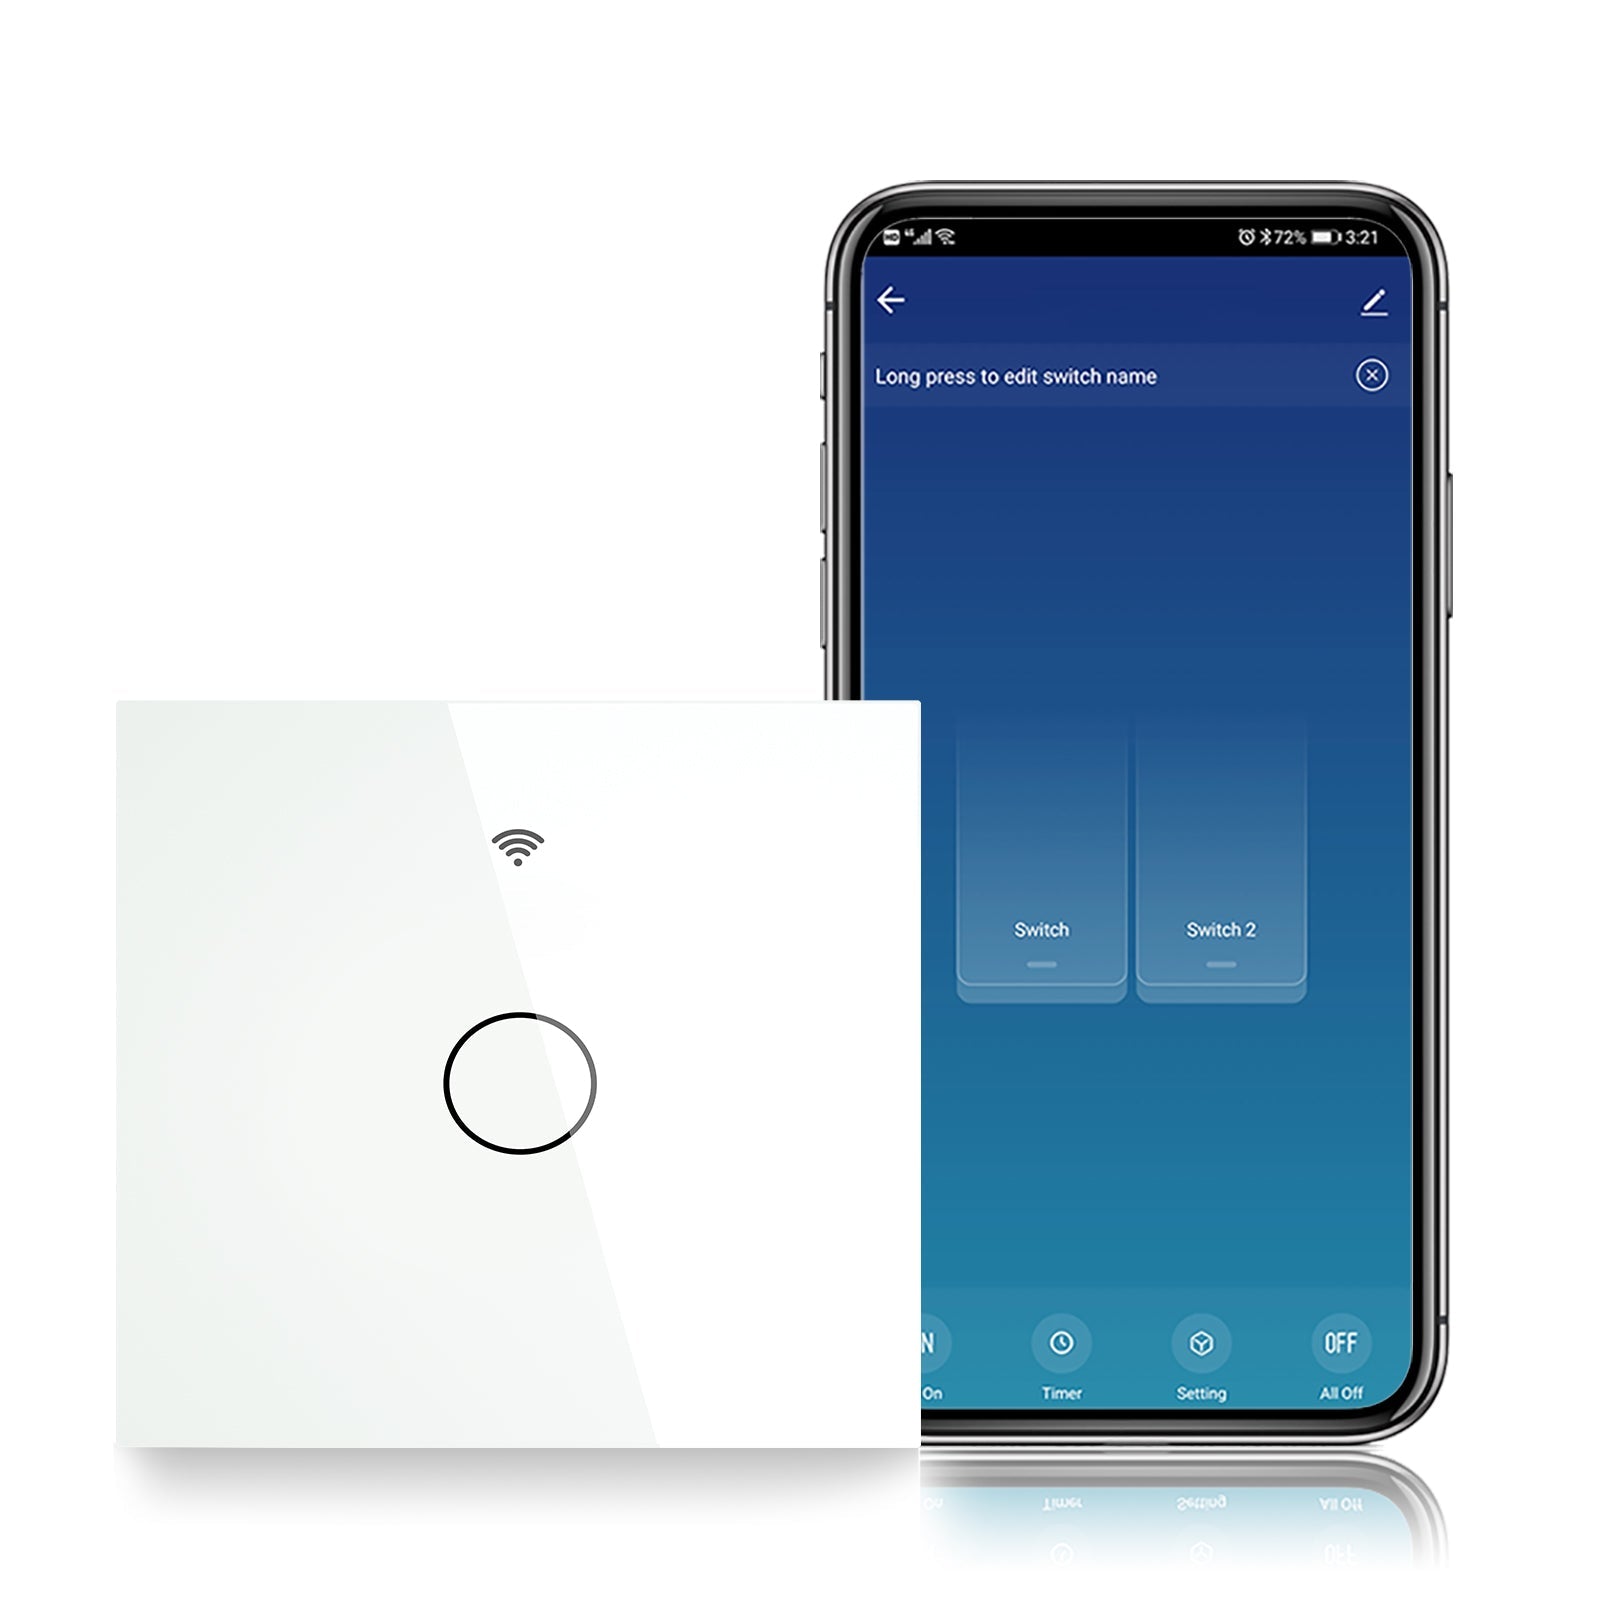 MOES ZigBee Smart Touch Wall Light Switch with Tuya ZigBee 3.0 Wireless  Hub,No Neutral Wire/N+L Wiring,No Capacitor,Smart Life Tuya 2/3 Way Remote  Control, Compatible with Alexa Google Home,2 Gang Bla - .com